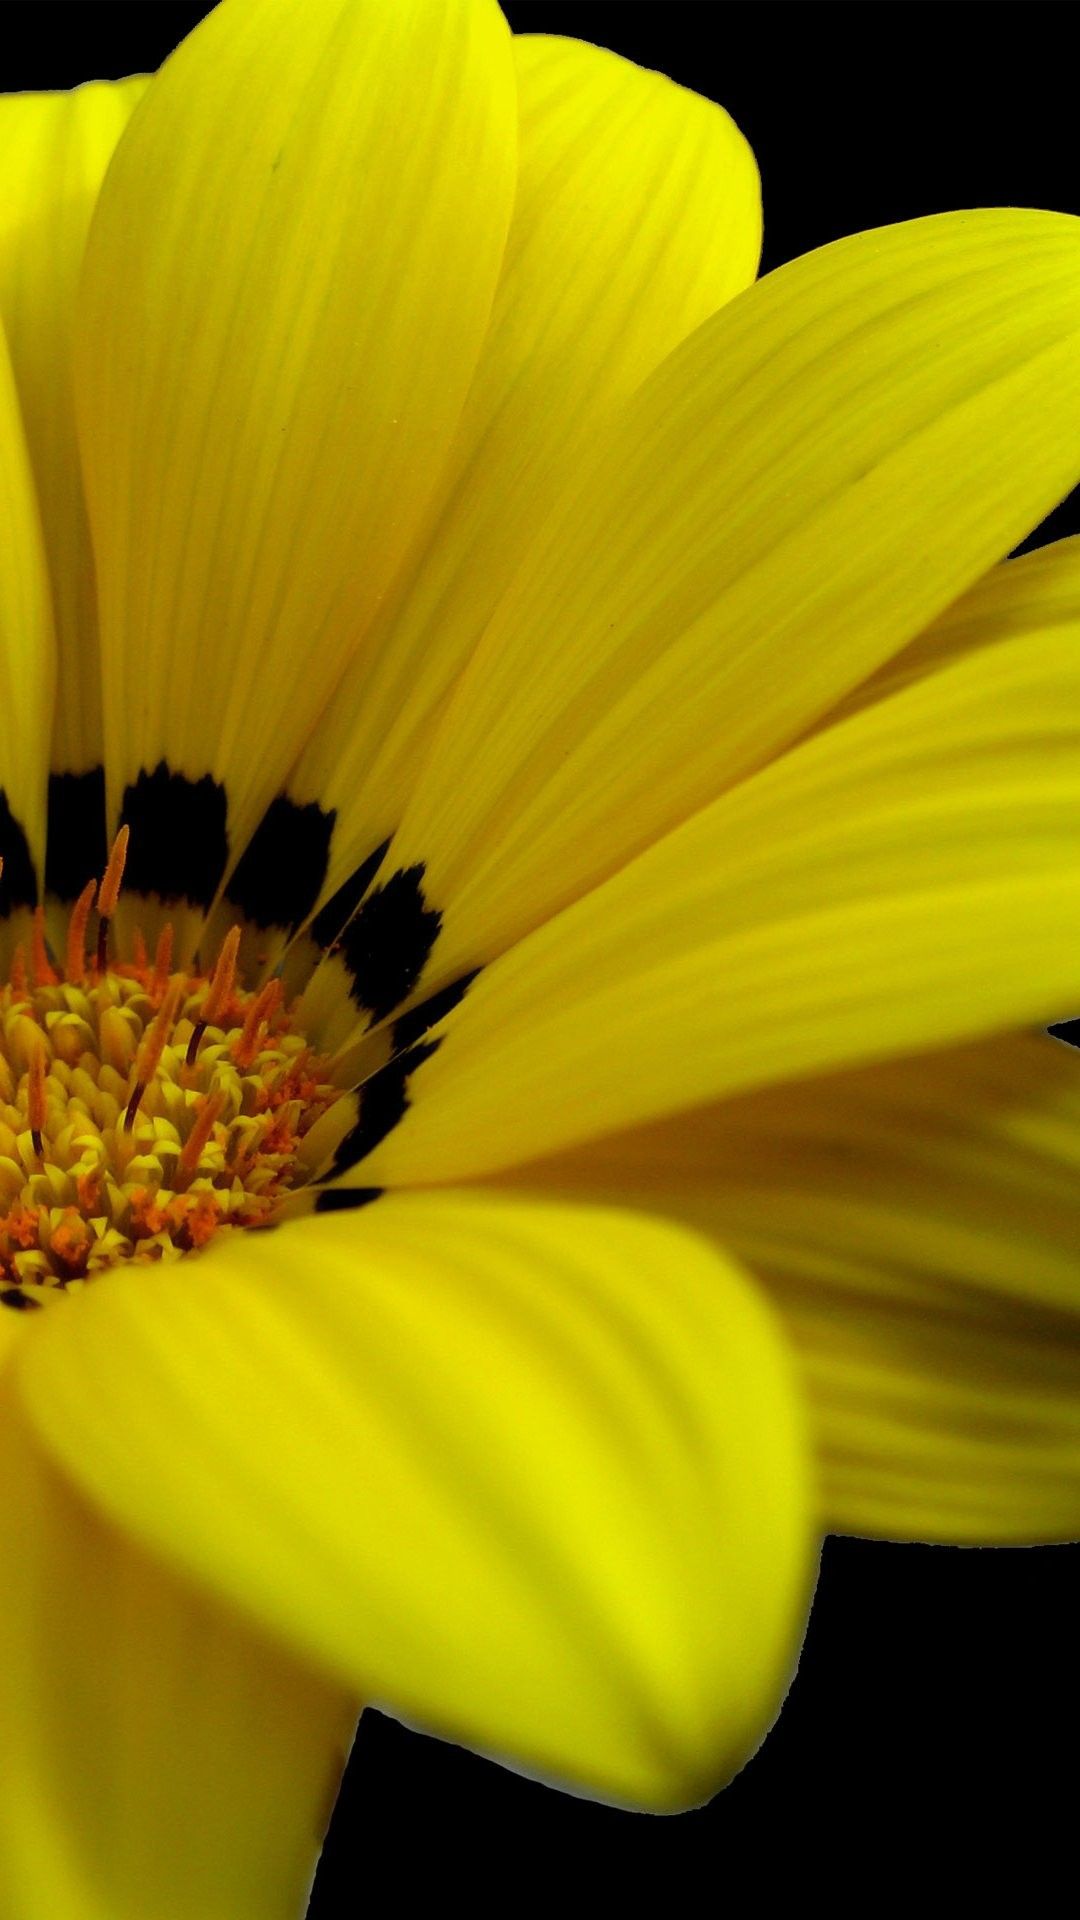 Yellow Flowers iPhone 6 Plus Wallpaper 14146 iPhone 6 Plus Wallpaper. Paisagens, Divisórias